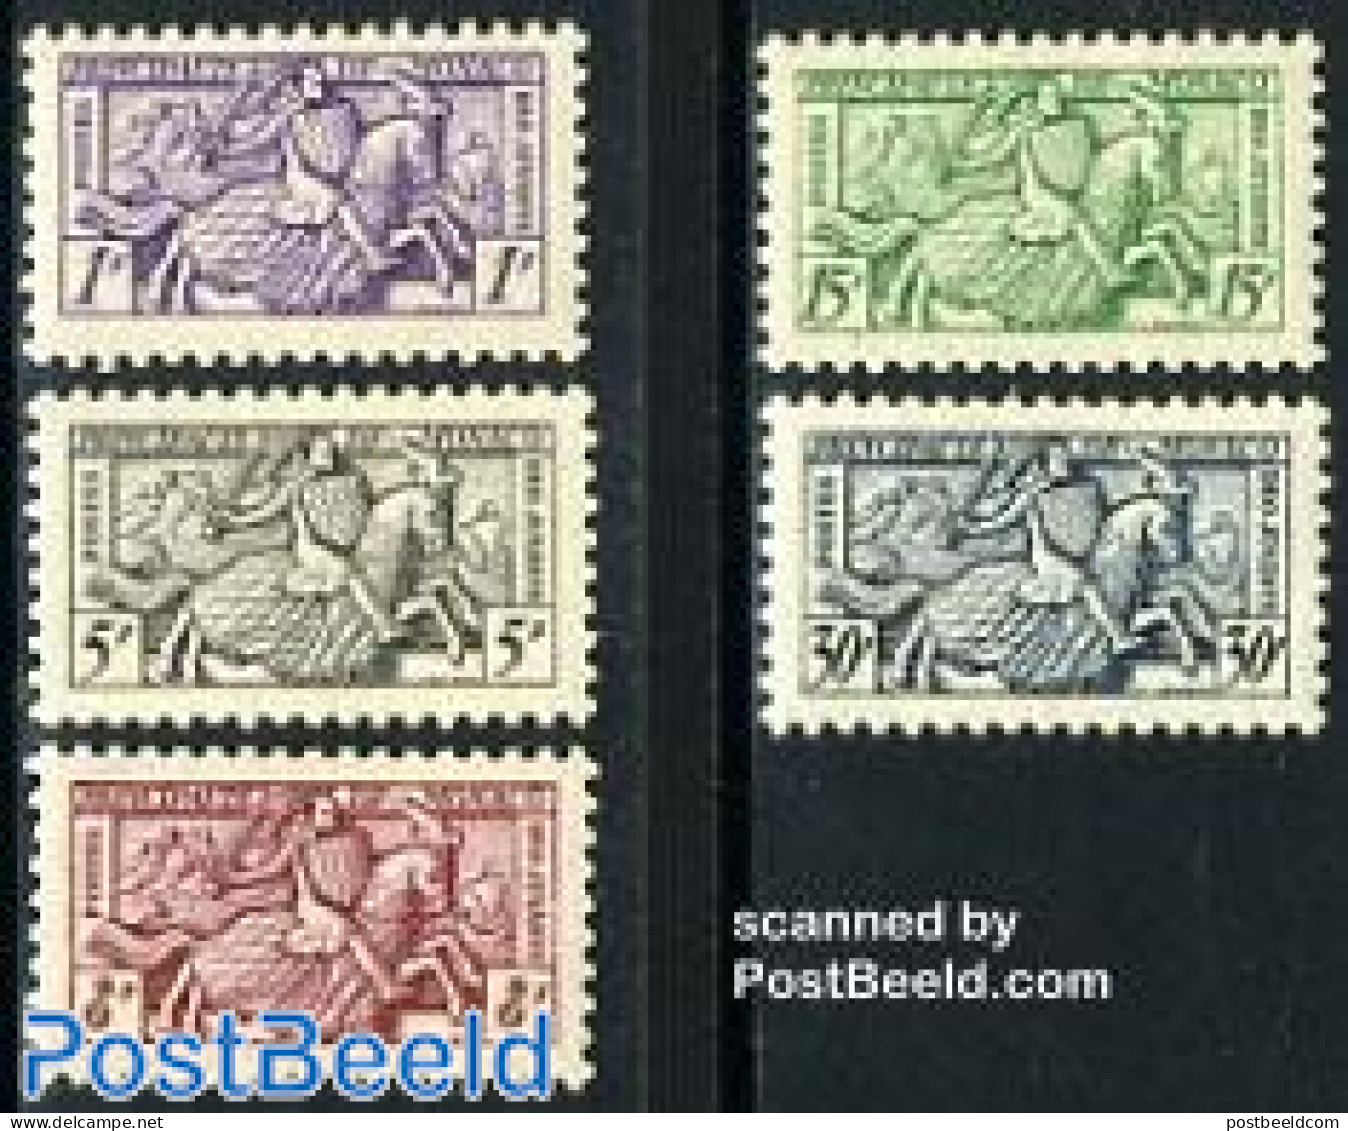 Monaco 1951 Seal Of Prince 5v, Unused (hinged), History - Nature - Knights - Horses - Neufs